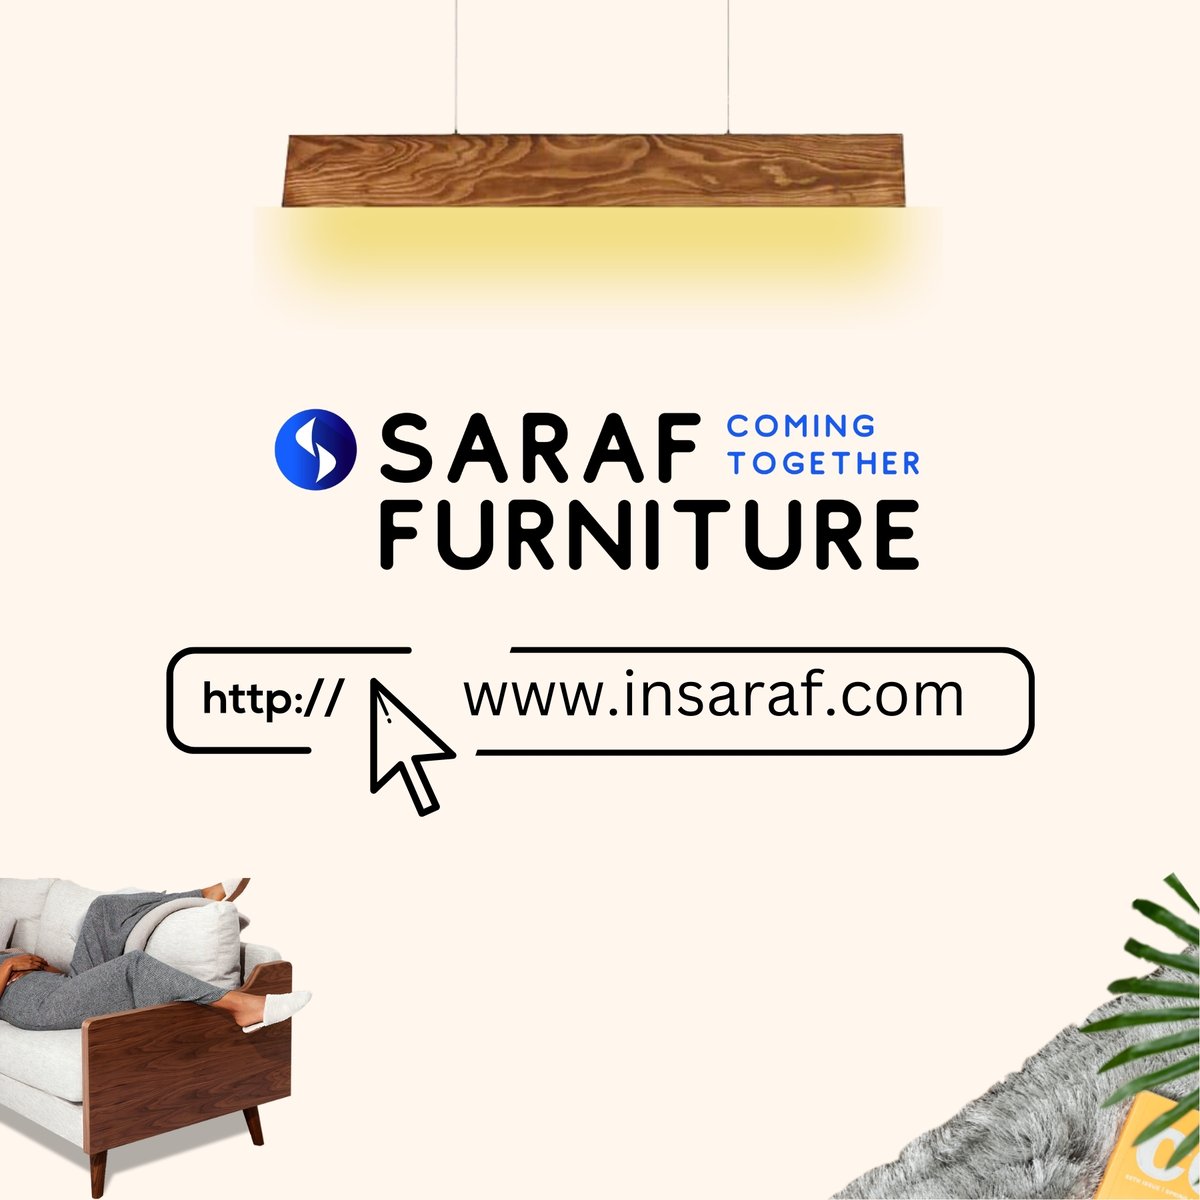 Upgrade your bedroom with elegant and practical bedside tables. 🛏️
#BedroomDecor #StyleYourSpace #SarafFurniture #insaraf